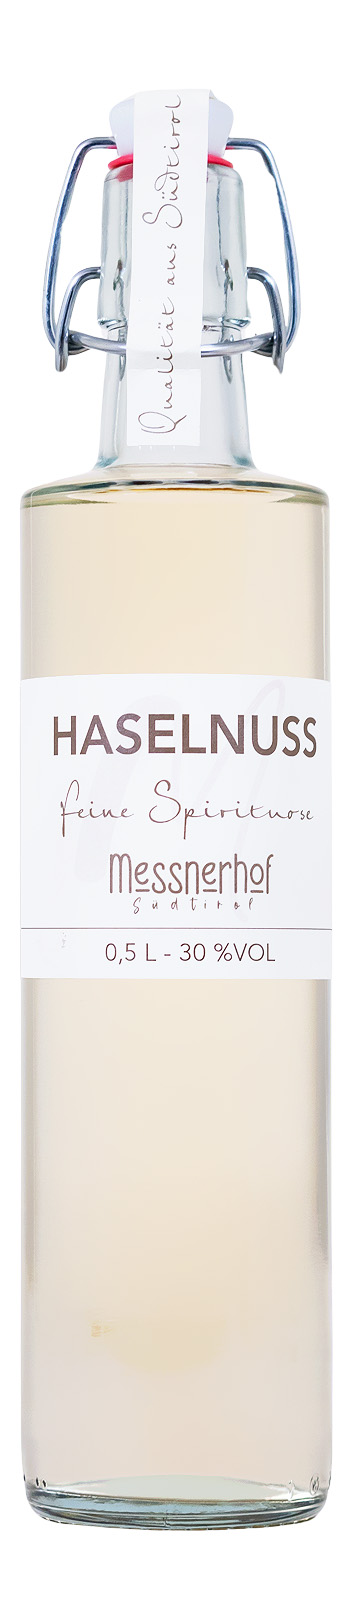 Messnerhof Feine Haselnuss Spirituose - 0,5L 30% vol